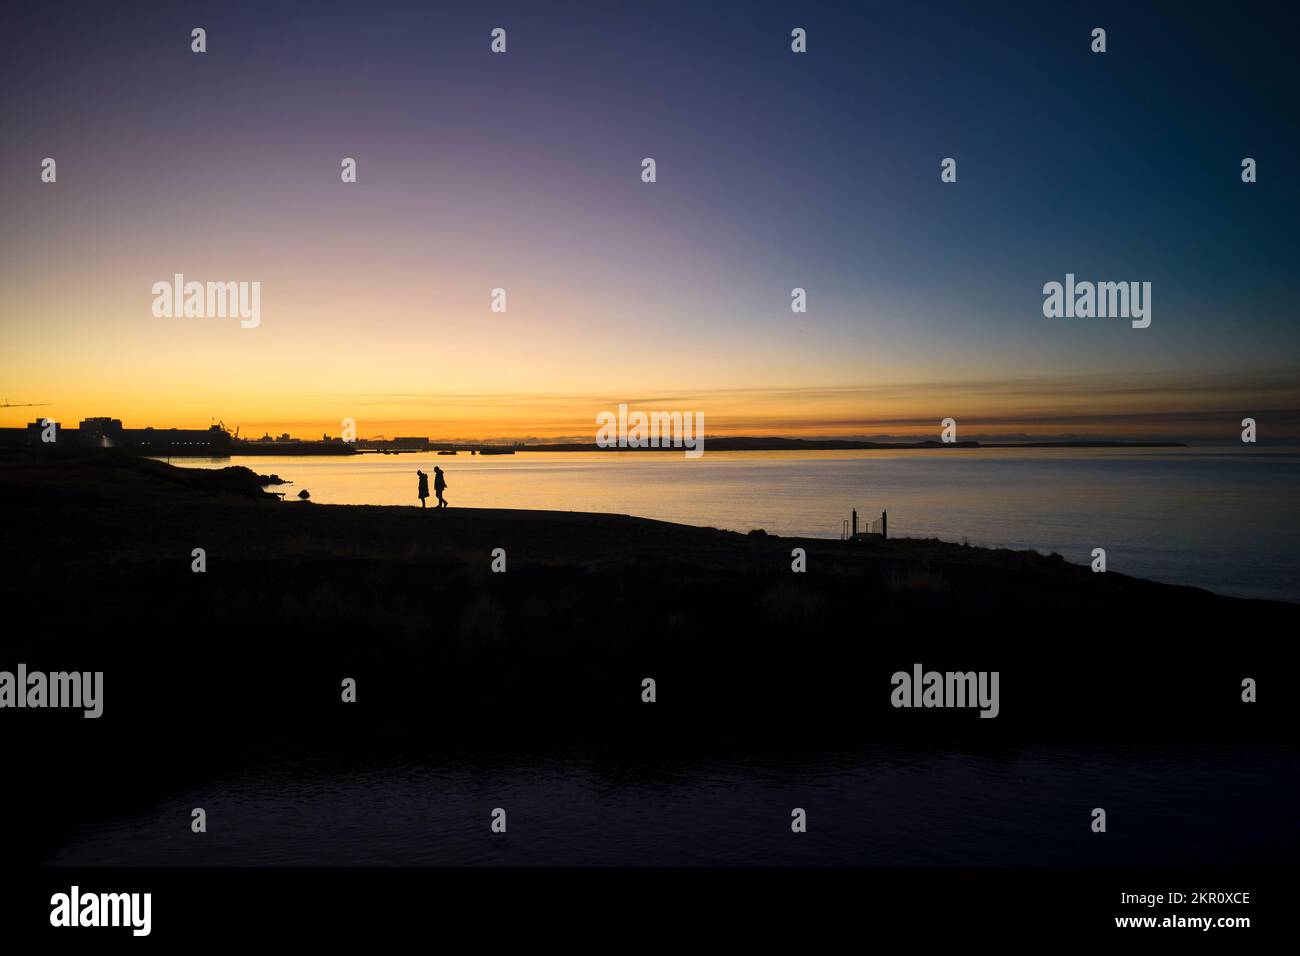 People walking on beach at sunset Stock Photo